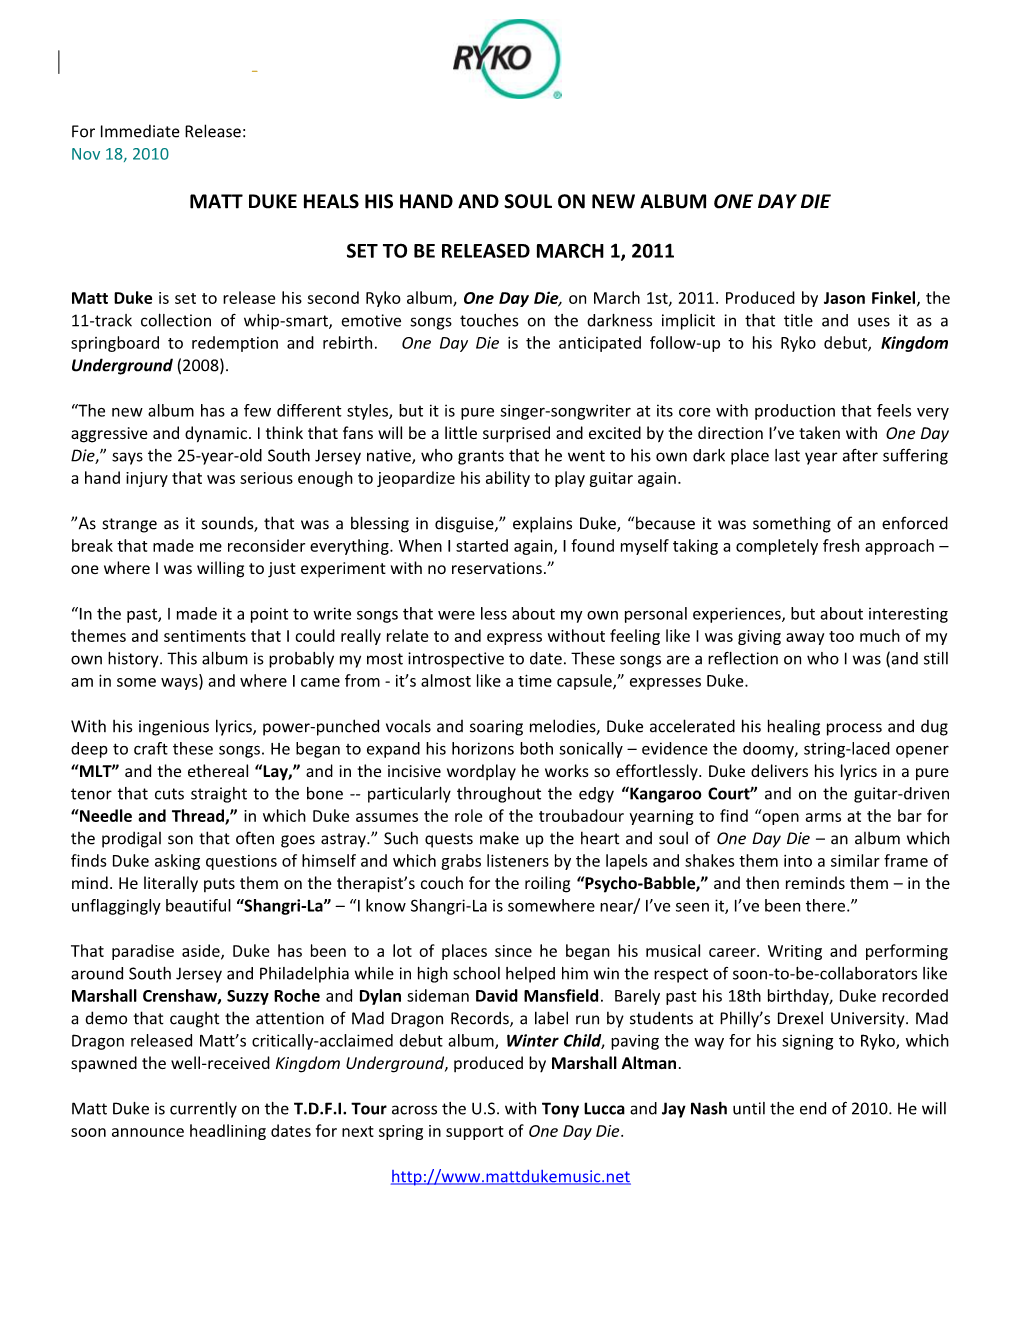 Matt Duke Heals His Hand and Soul on New Album One Day Die